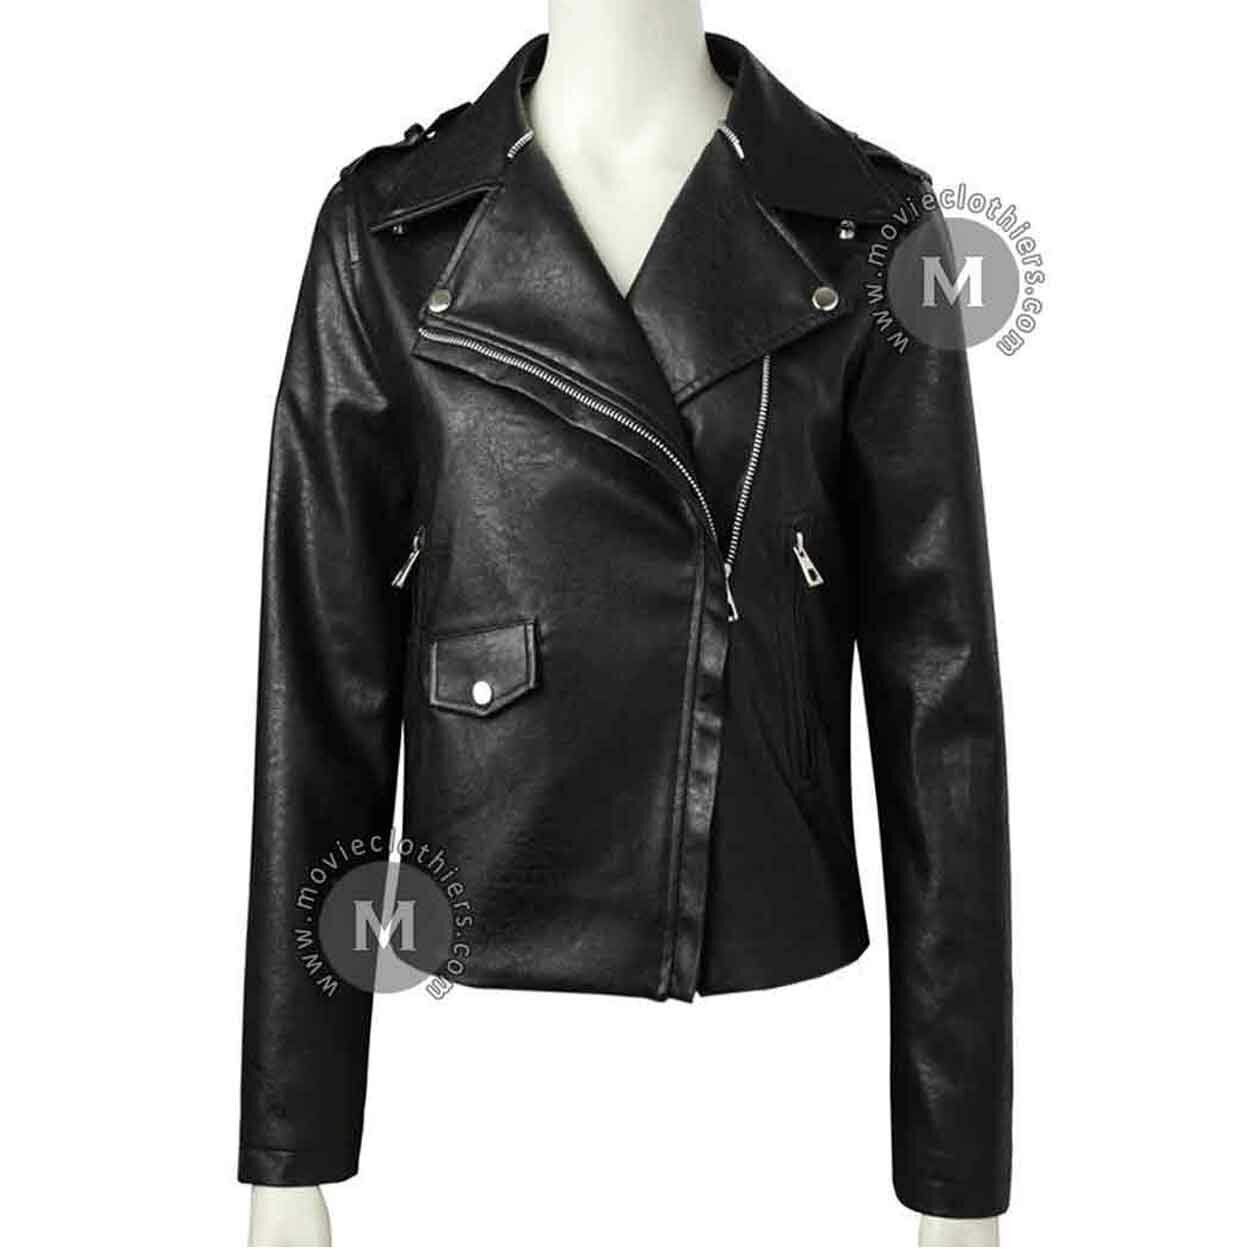 Jessica Jones Leather Jacket